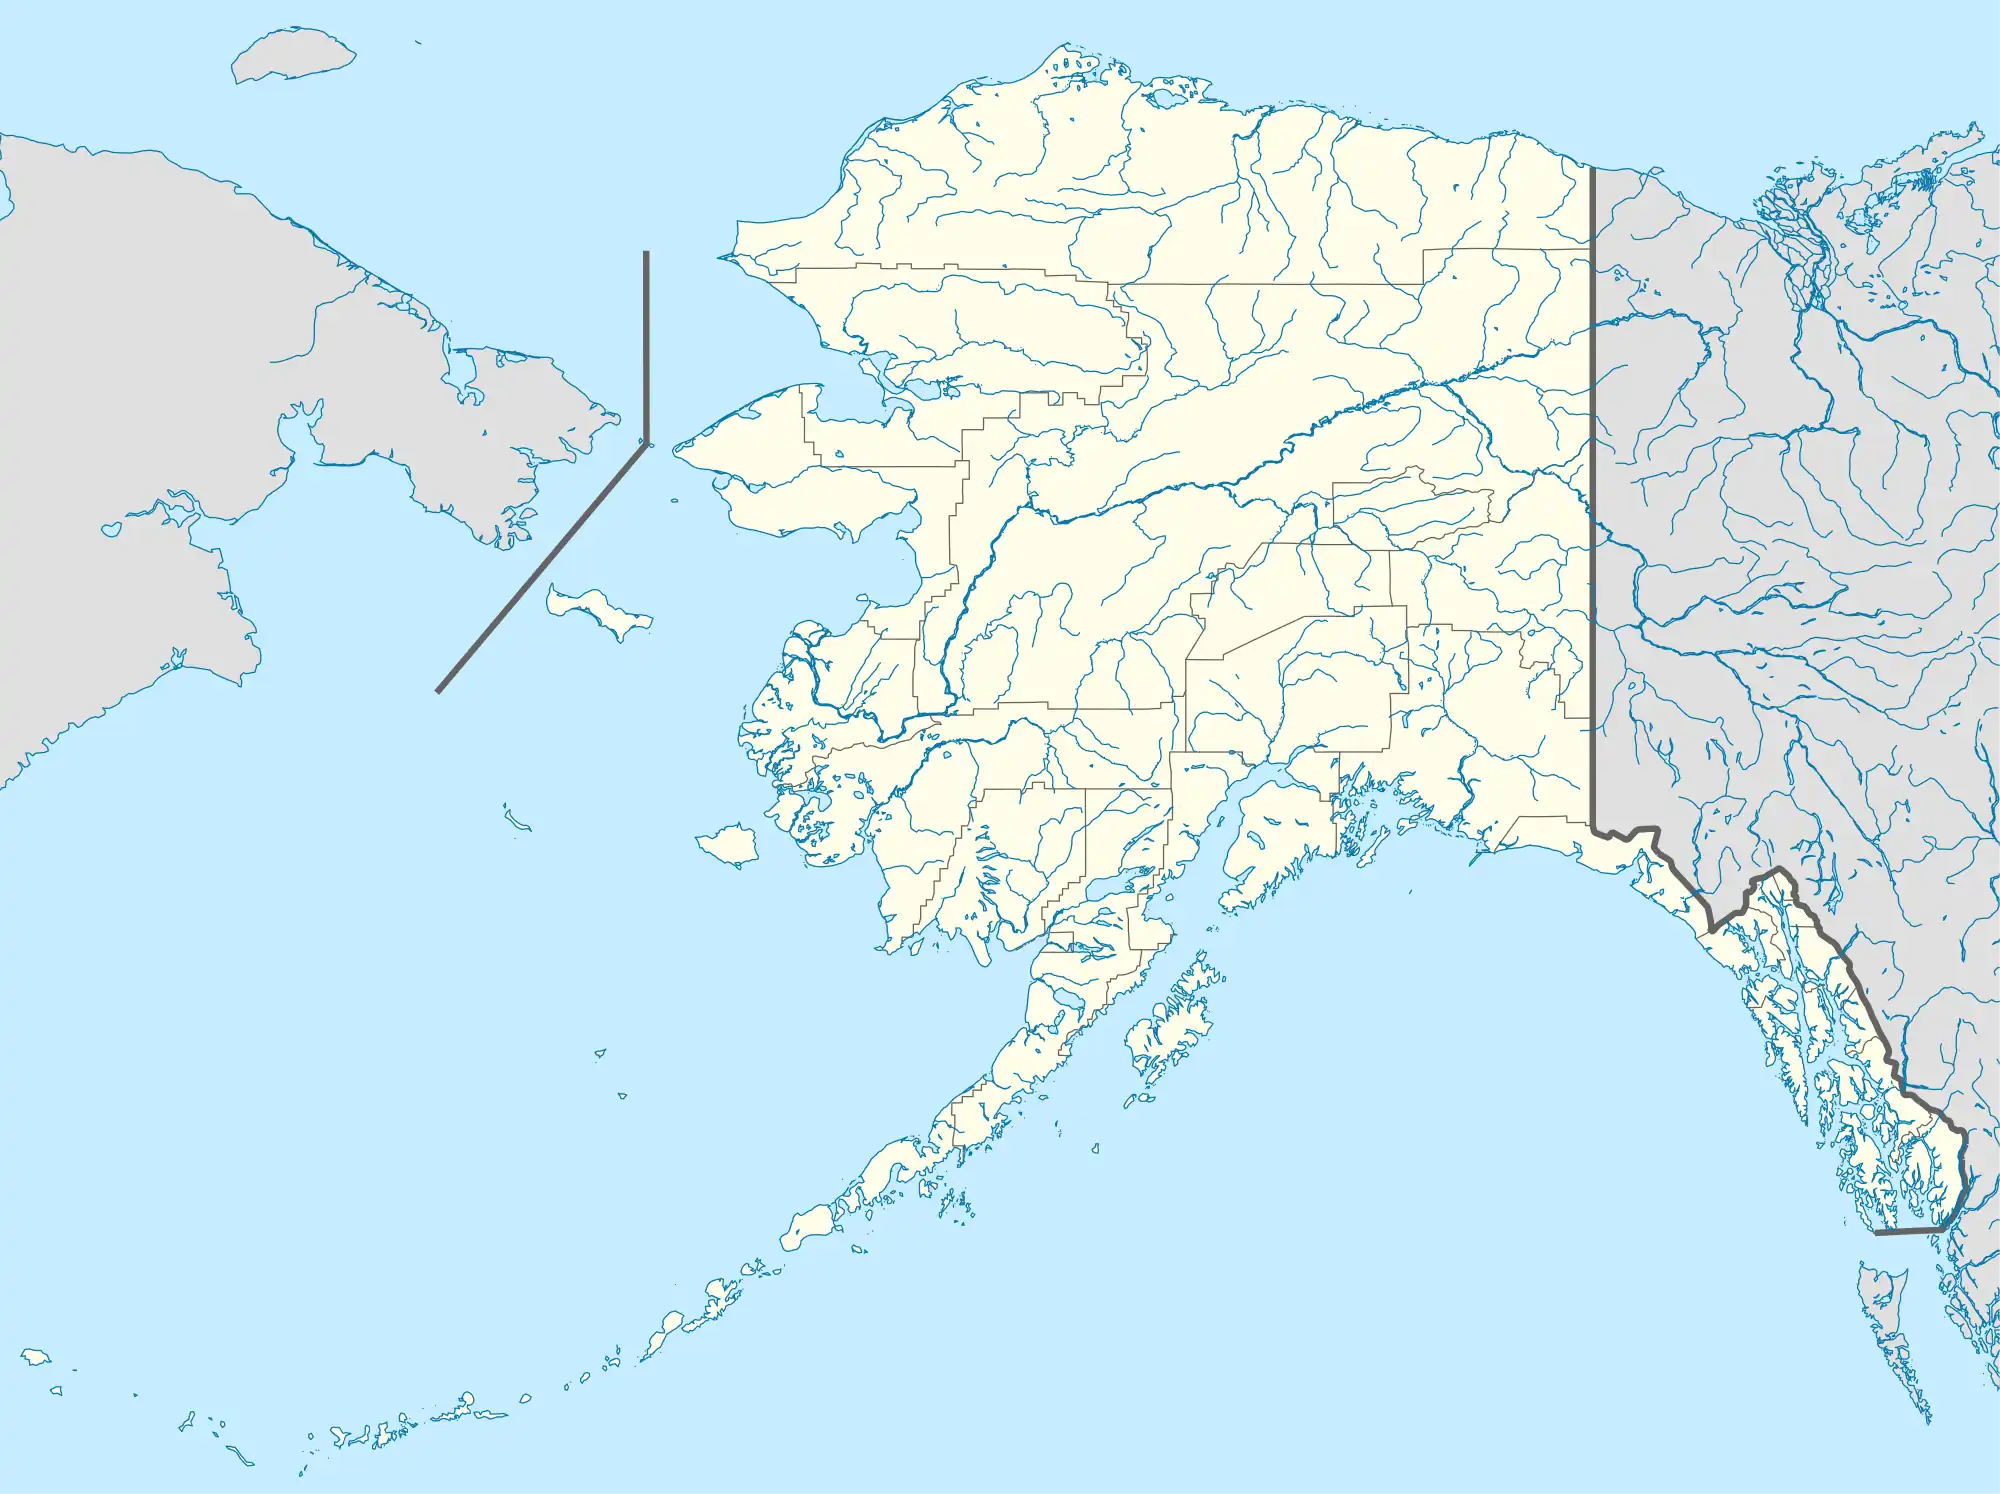 Akun Island is located in Alaska